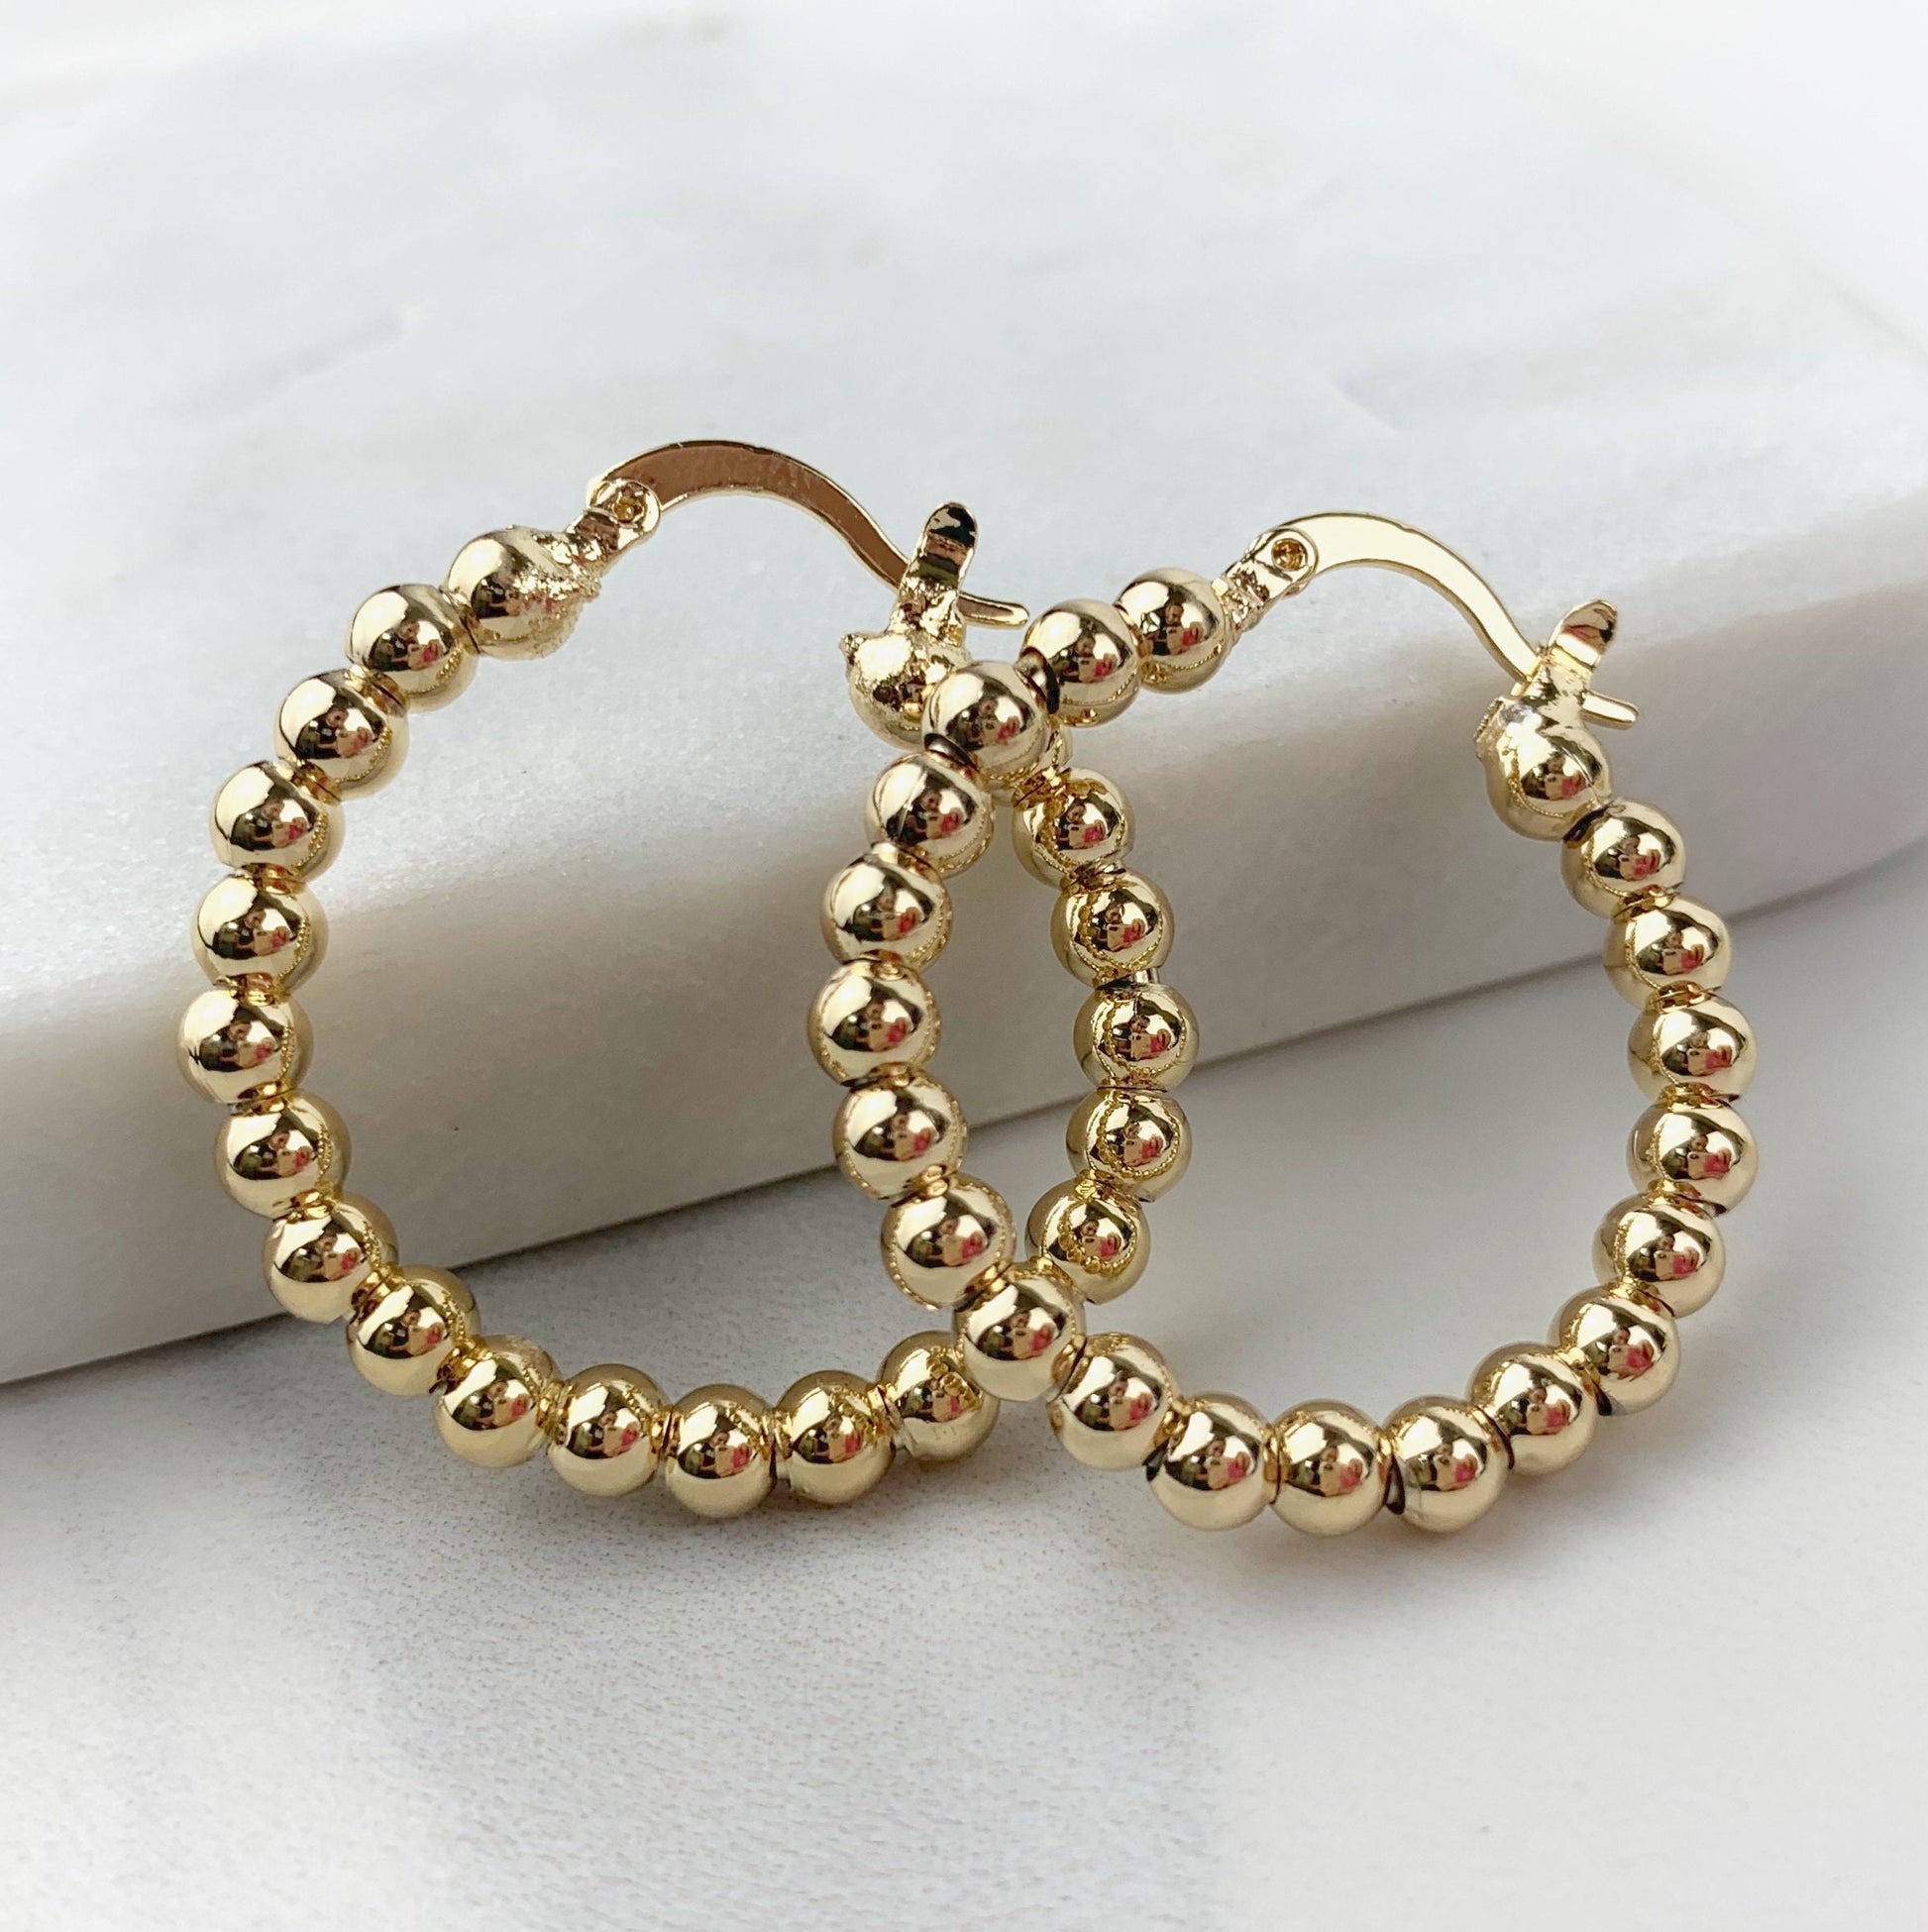 18K Gold Filled Beaded Hoop Earrings Available in 30mm, 40mm or 50mm Diameter Wholesale Jewelry Making Supplies Medium 40